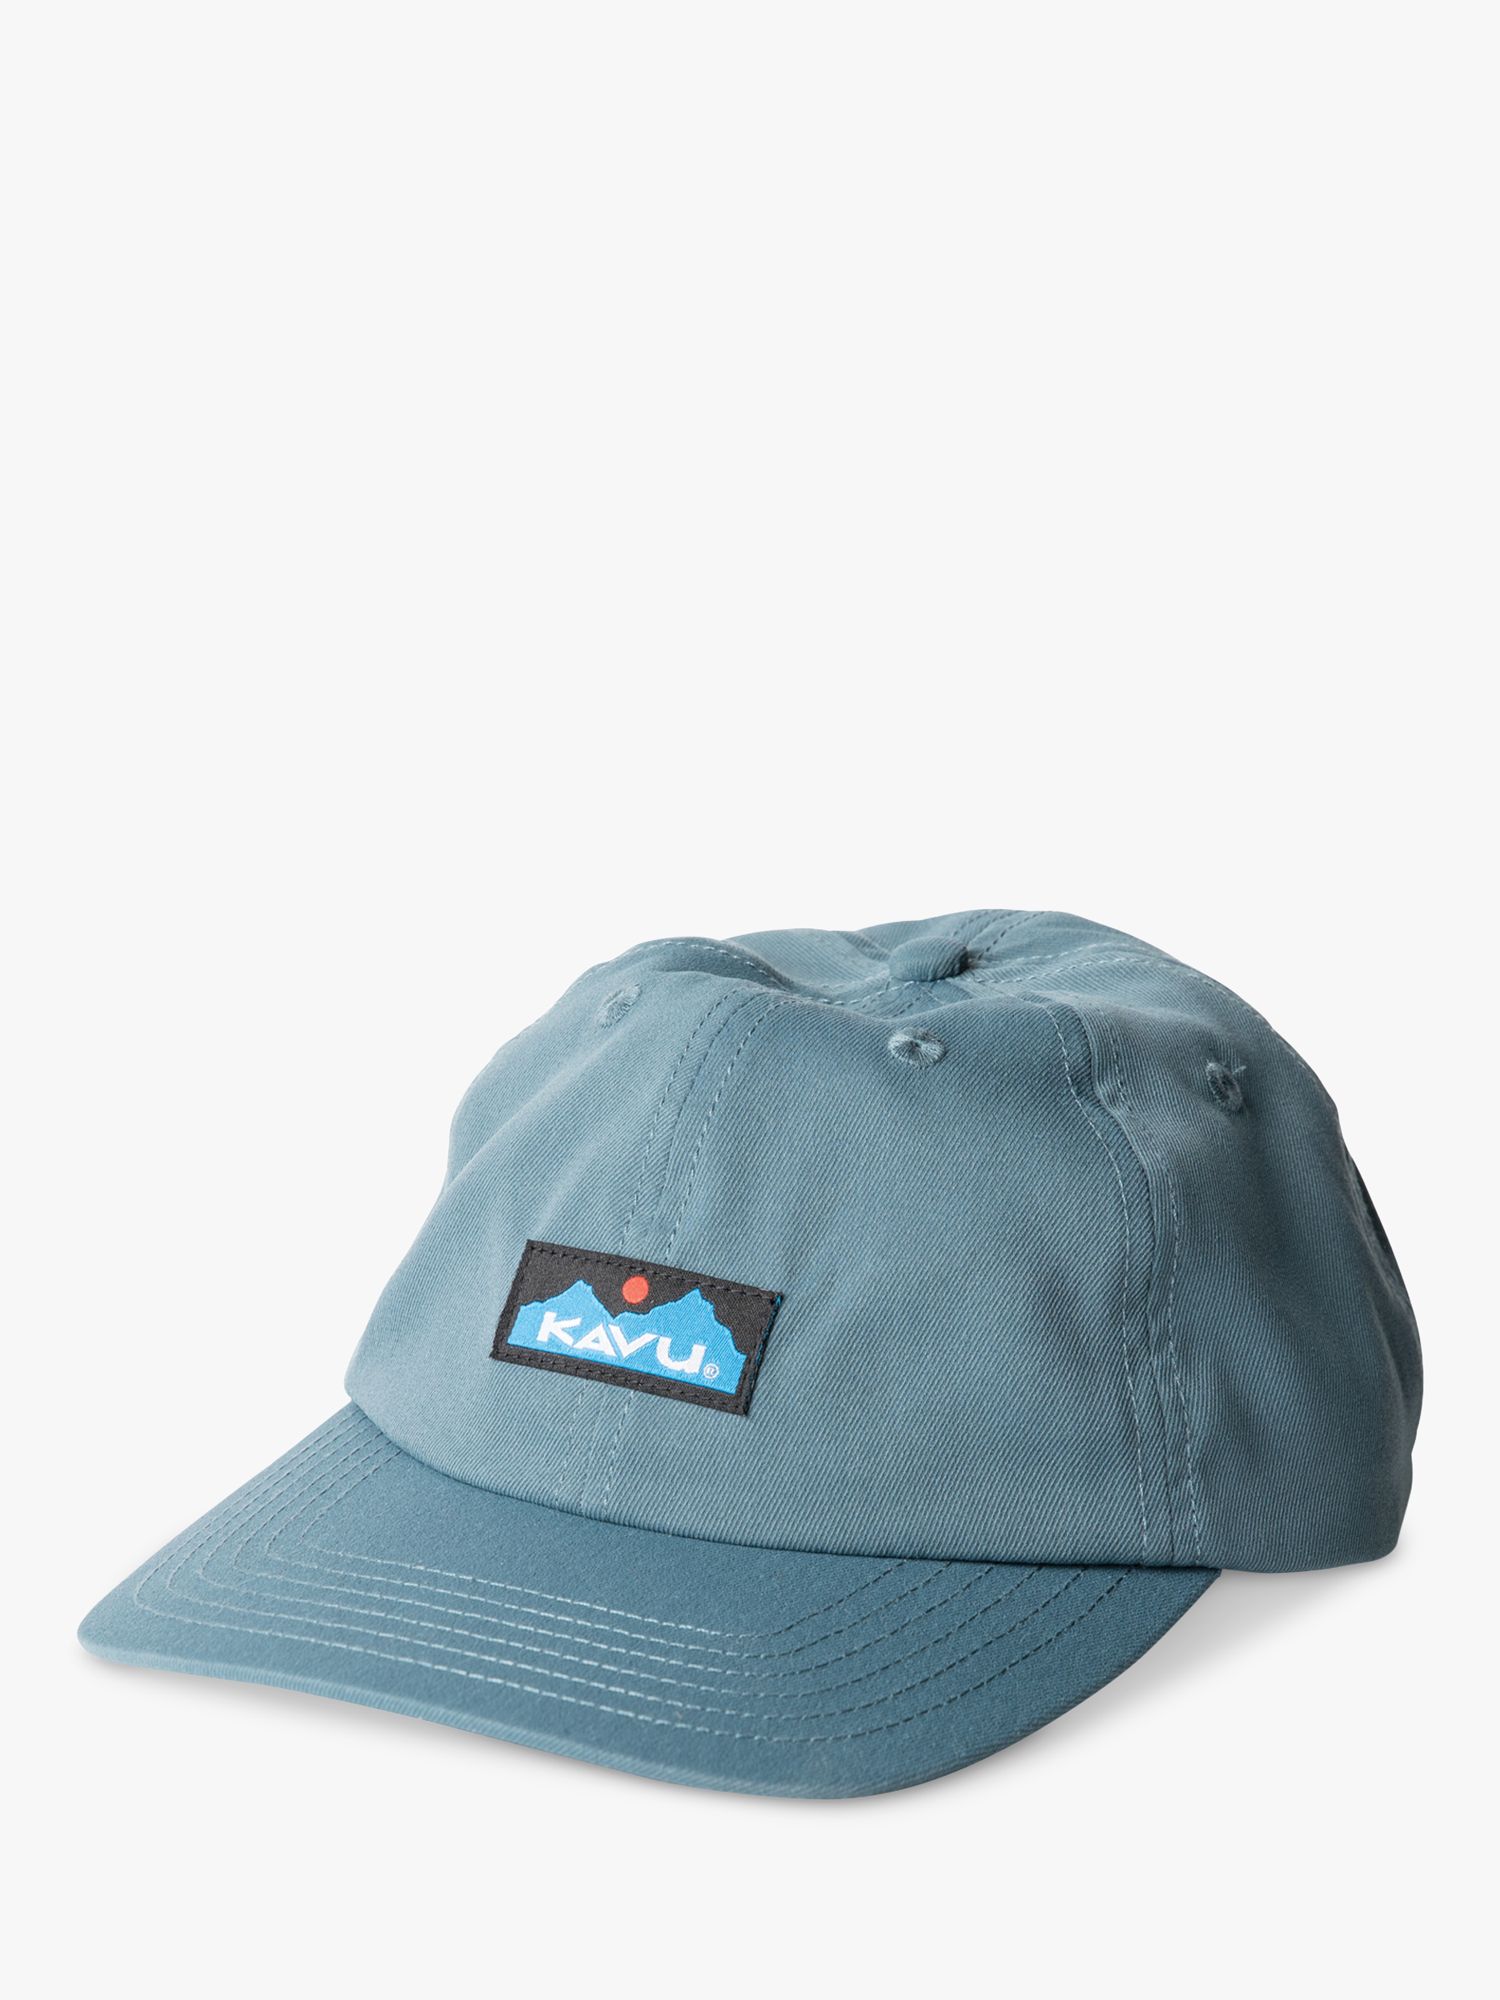 KAVU Ballard Classic Hat, Blue, One Size